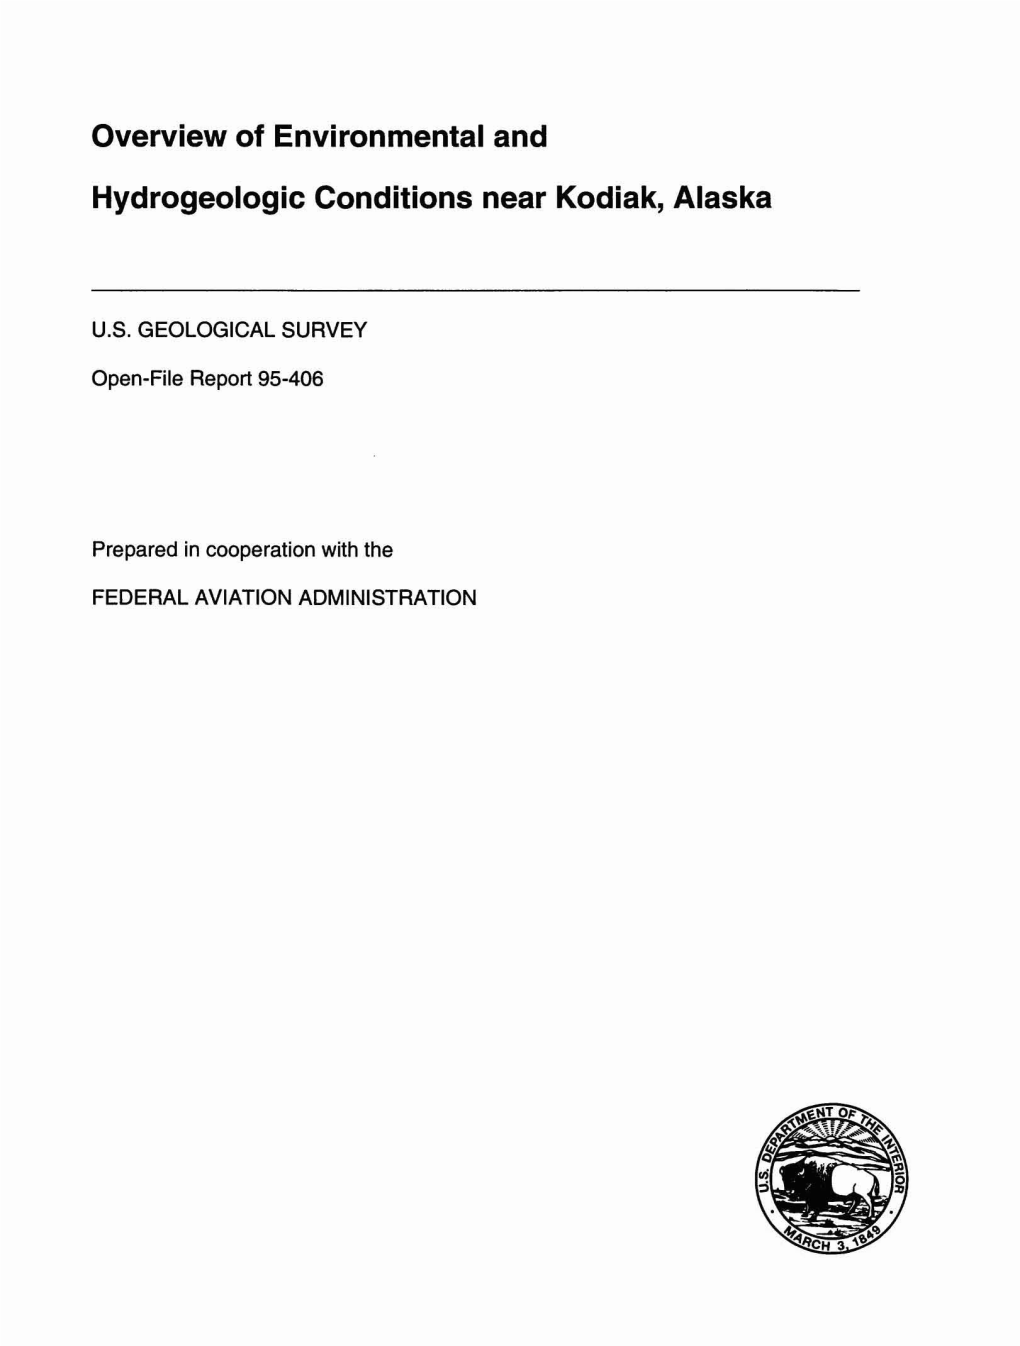 Hydrogeologic Conditions Near Kodiak, Alaska